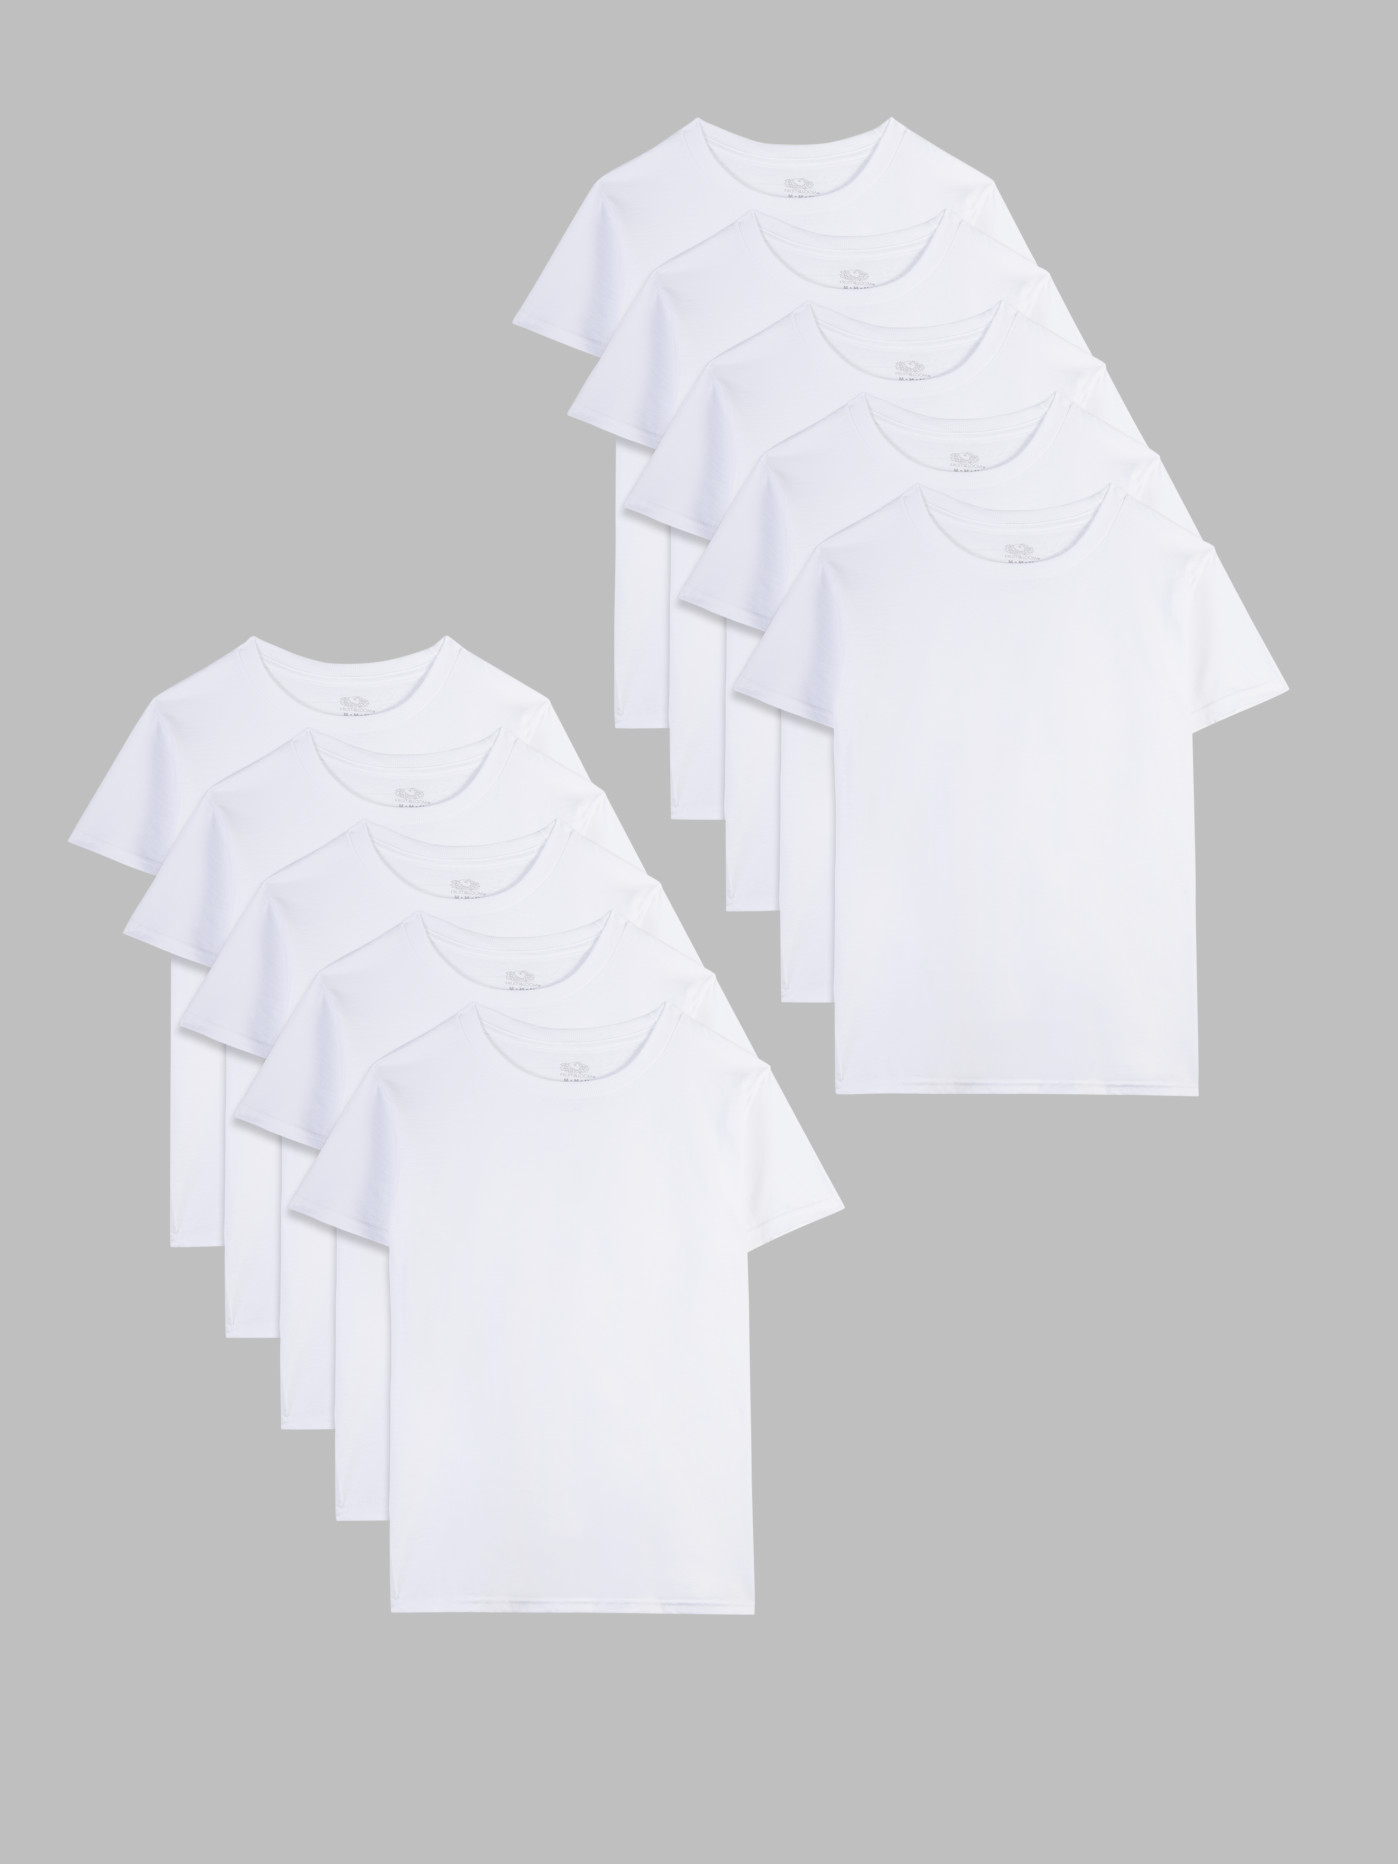 3-Pack Toddler Boy Casual White Tee & Plaid Shirt and Pocket Design Cargo Shorts Set